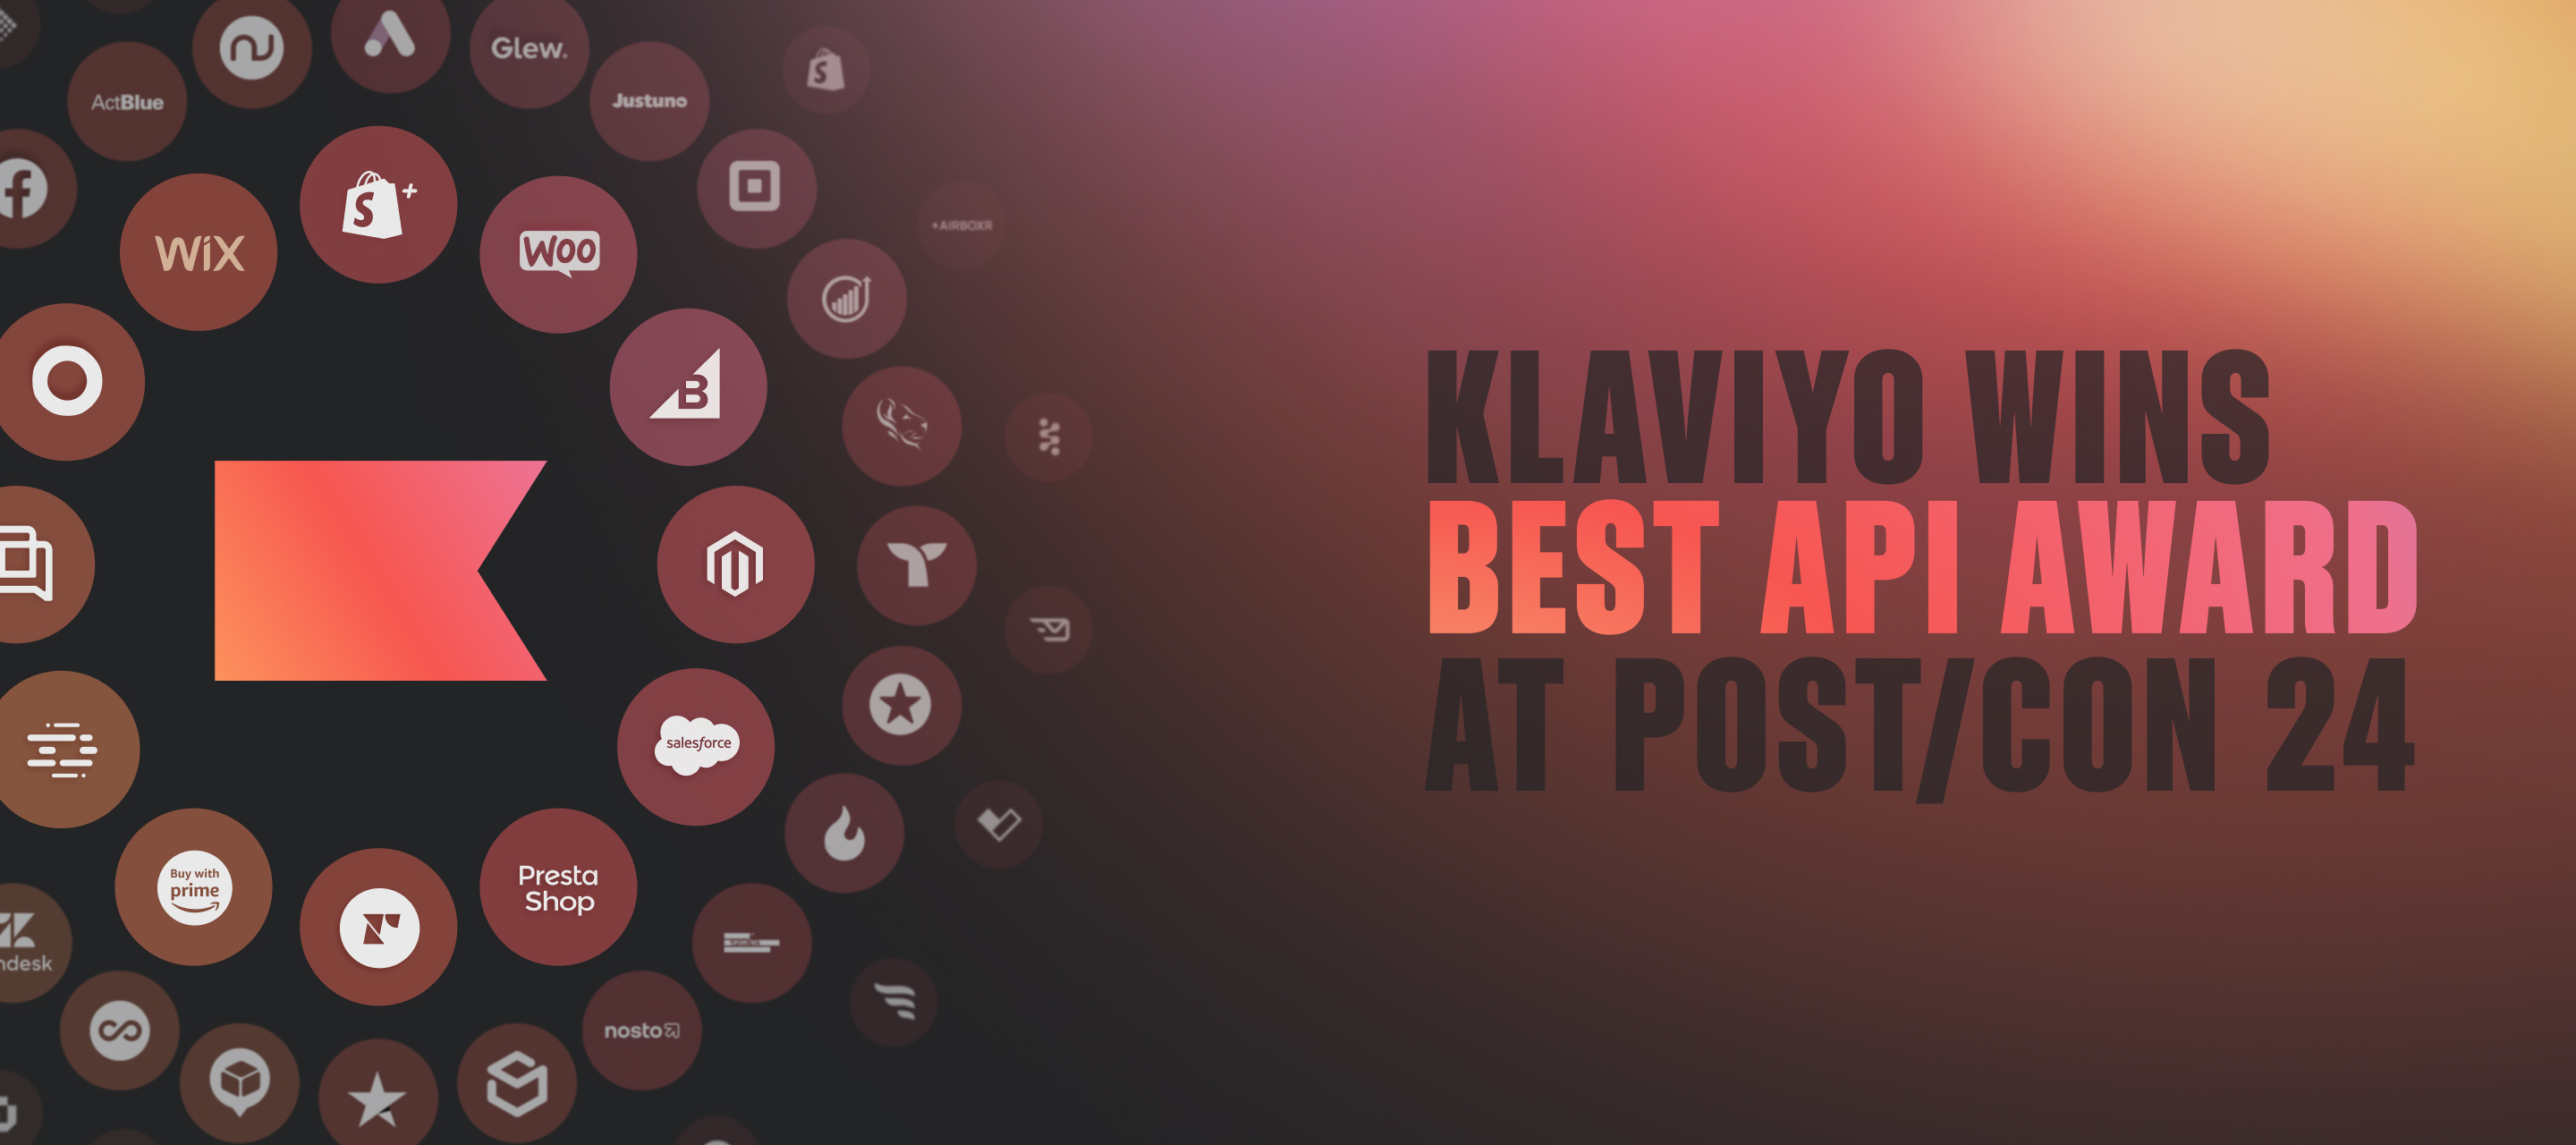 Klaviyo takes home "Best API" trophy at POST/CON 24! 🏆